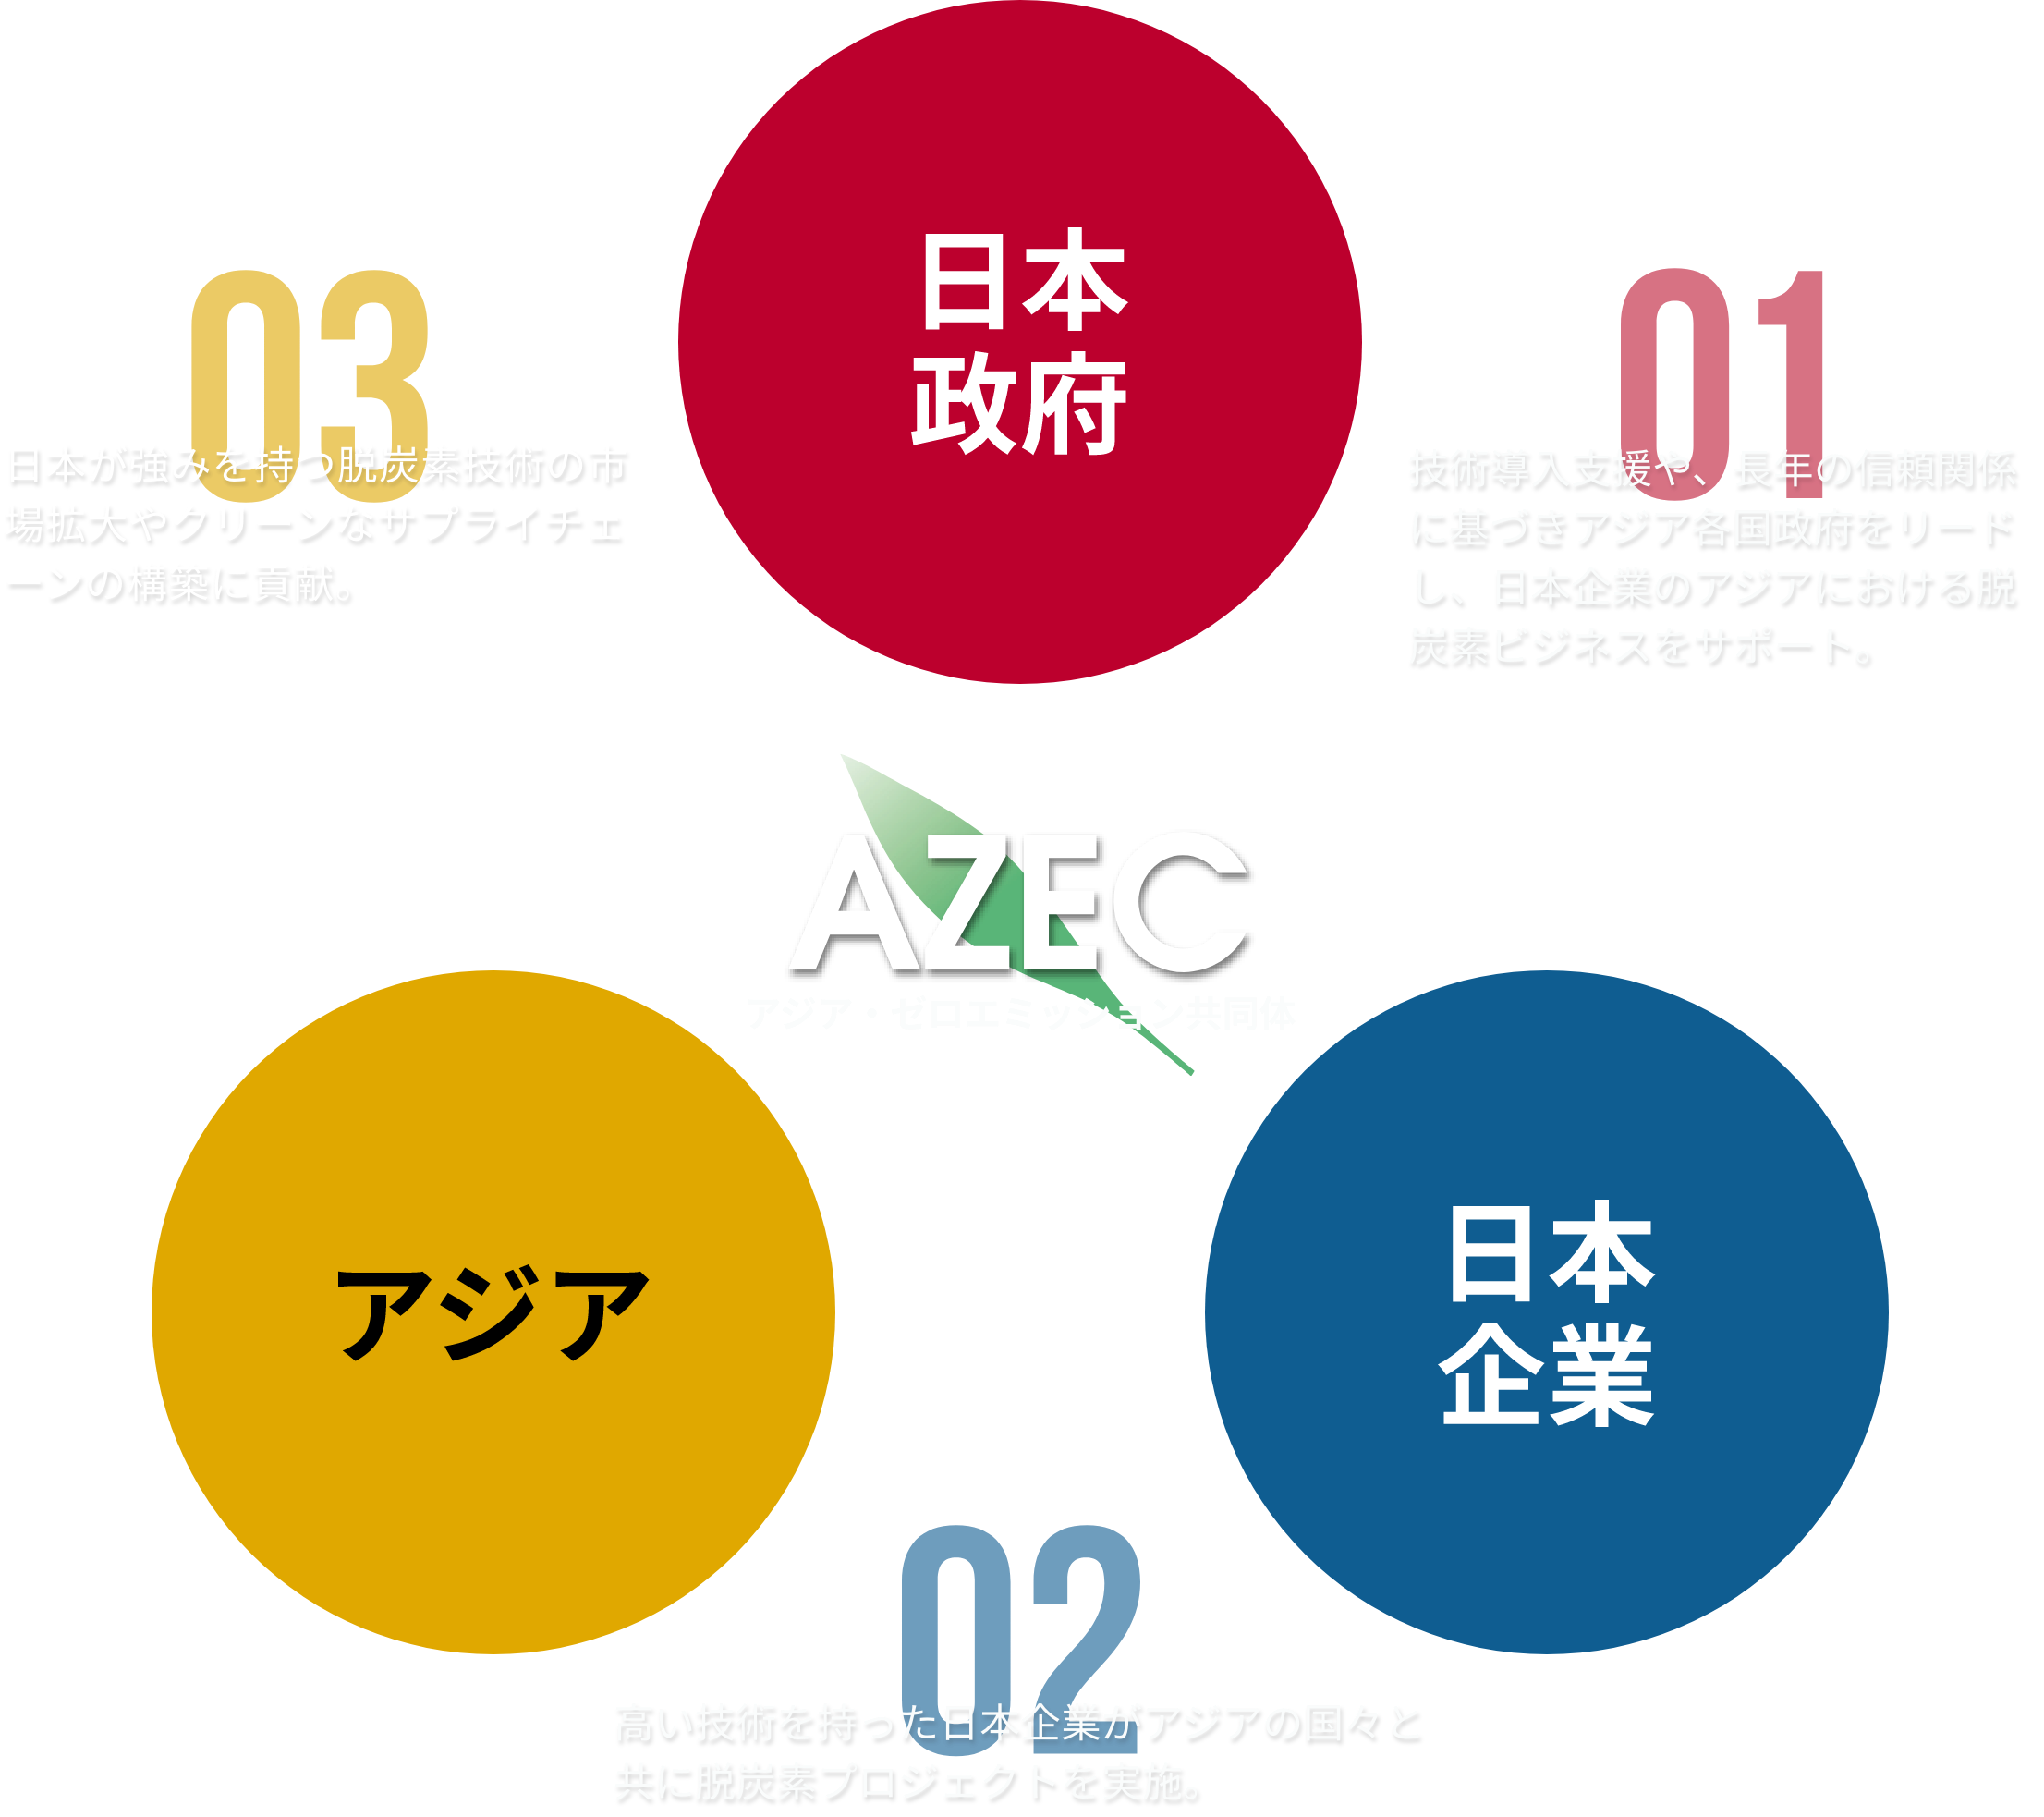 AZEC アジア・ゼロエミッション共同体 01:技術導入支援や、長年の信頼関係に基づきアジア各国政府をリードし、日本企業のアジアにおける脱炭素ビジネスをサポート。 02:高い技術を持った日本企業がアジアの国々と共に脱炭素プロジェクトを実施。 03:日本が強みを持つ脱炭素技術の市場拡大やクリーンなサプライチェーンの構築に貢献。